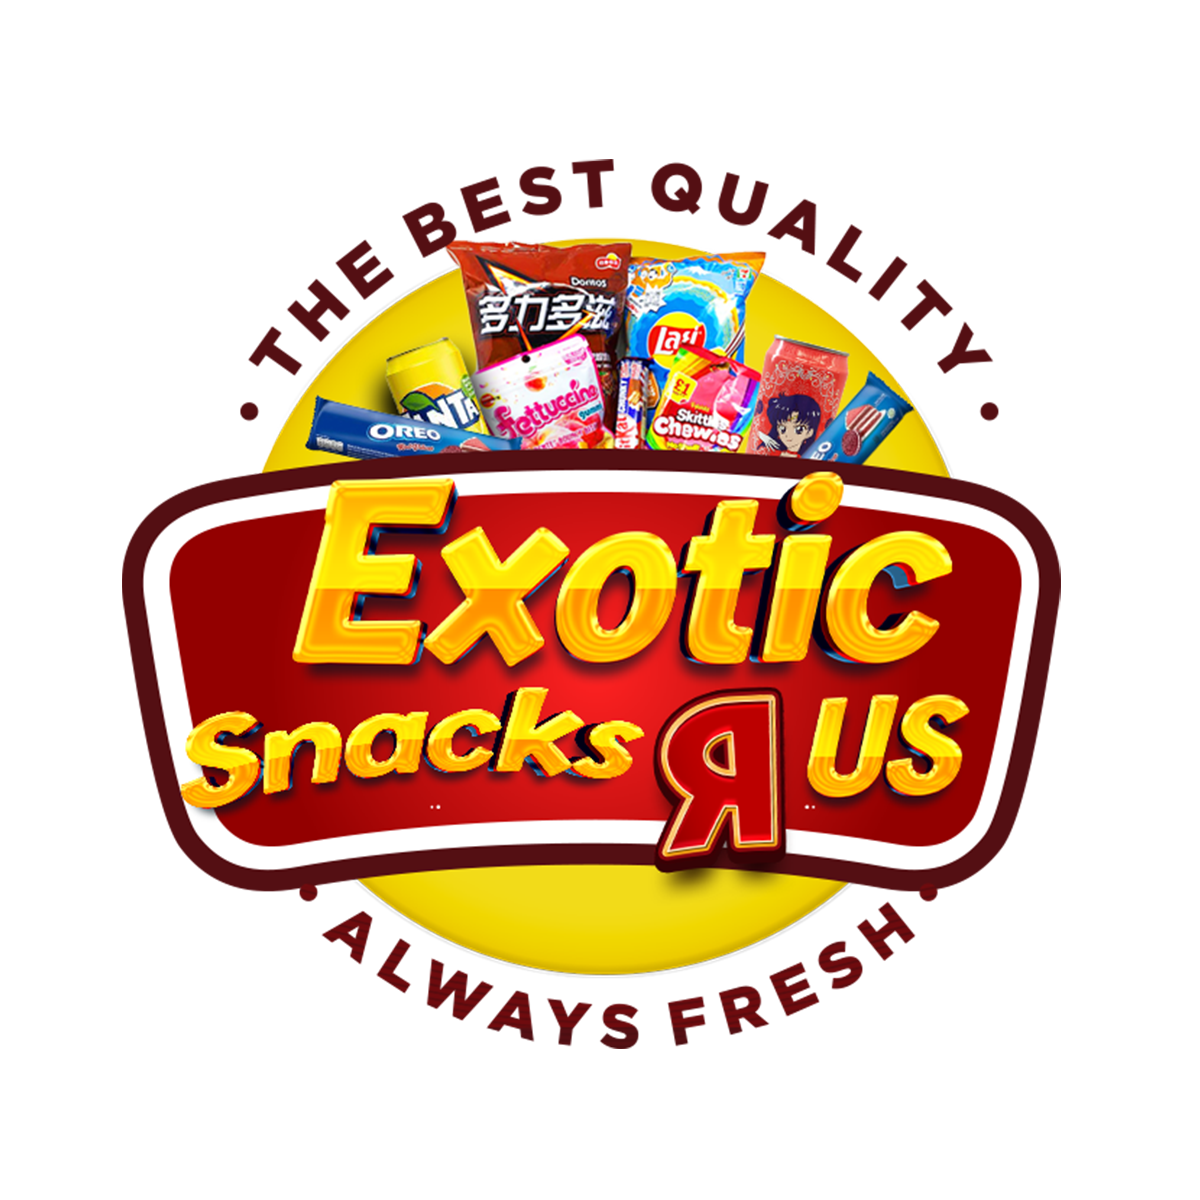 Exotic Snacks Я US